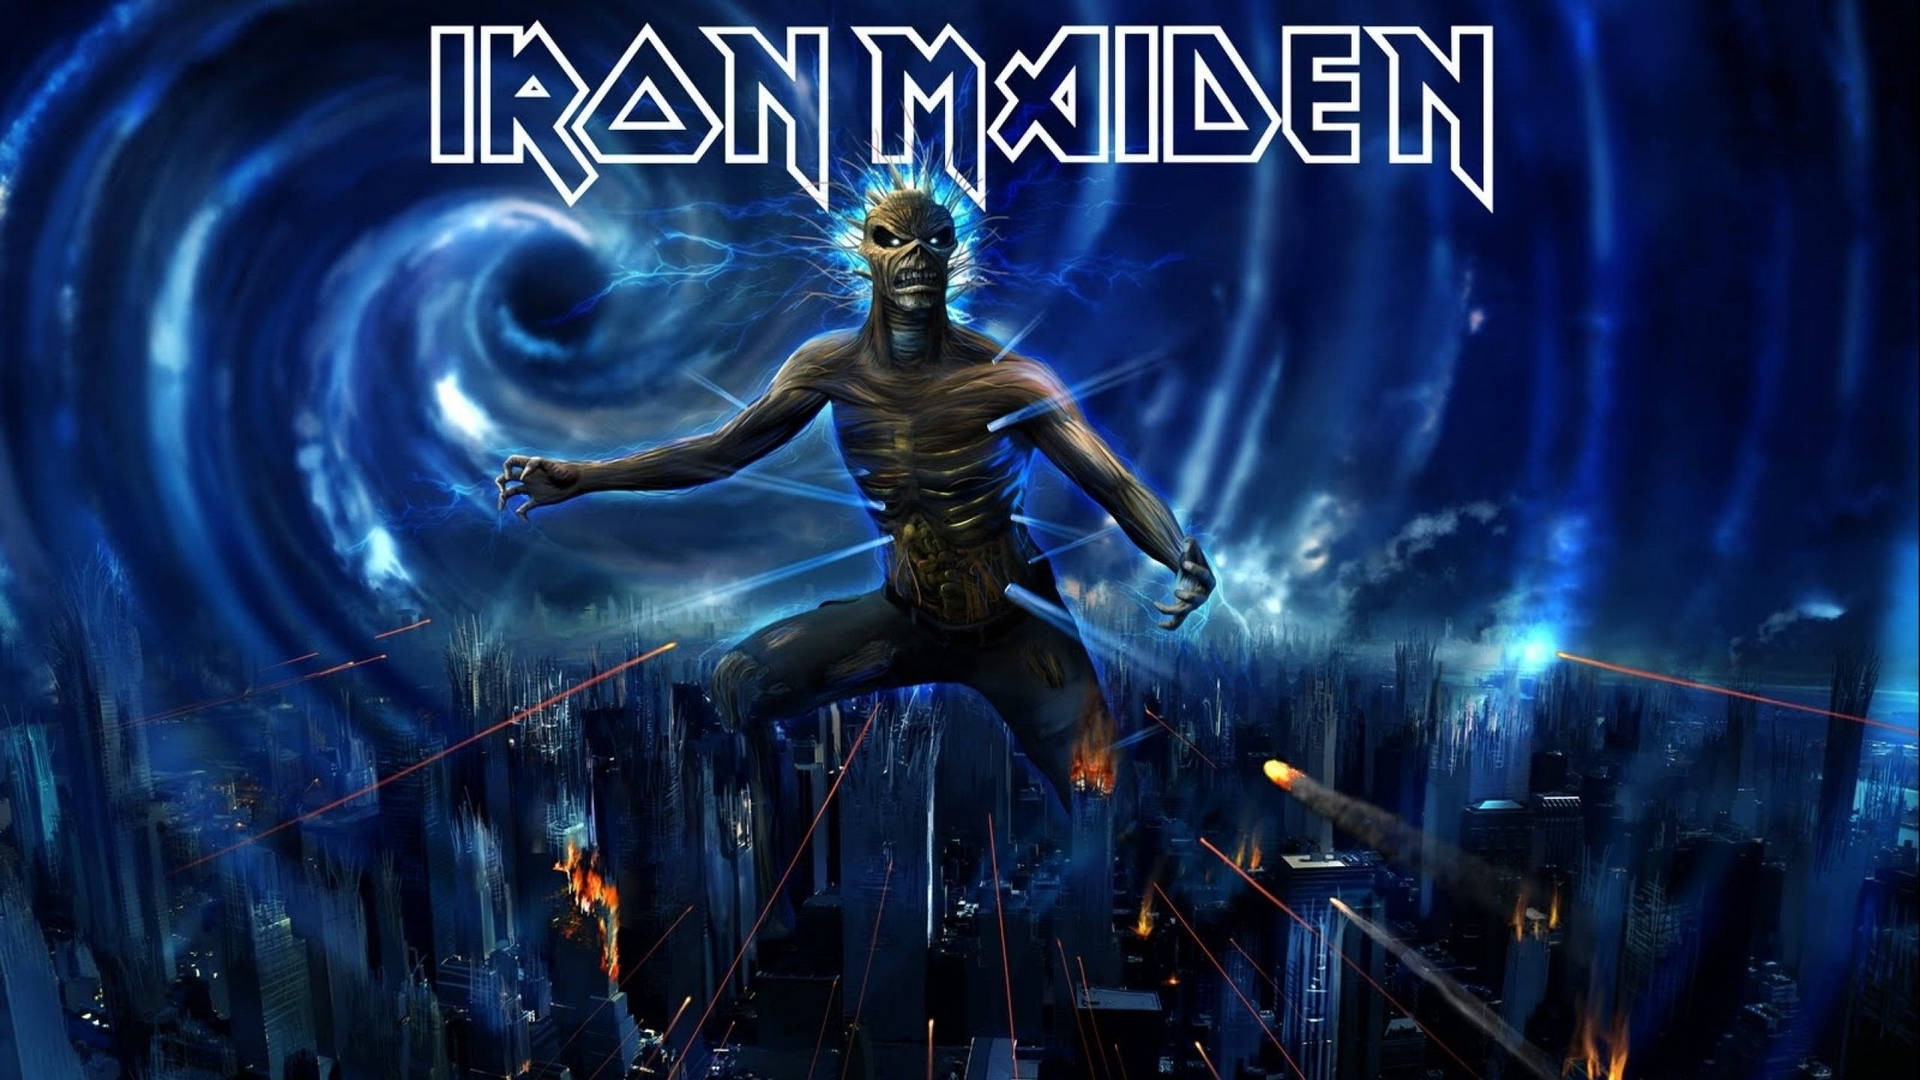 Free Iron Maiden Background Photos, [100+] Iron Maiden Background for FREE  